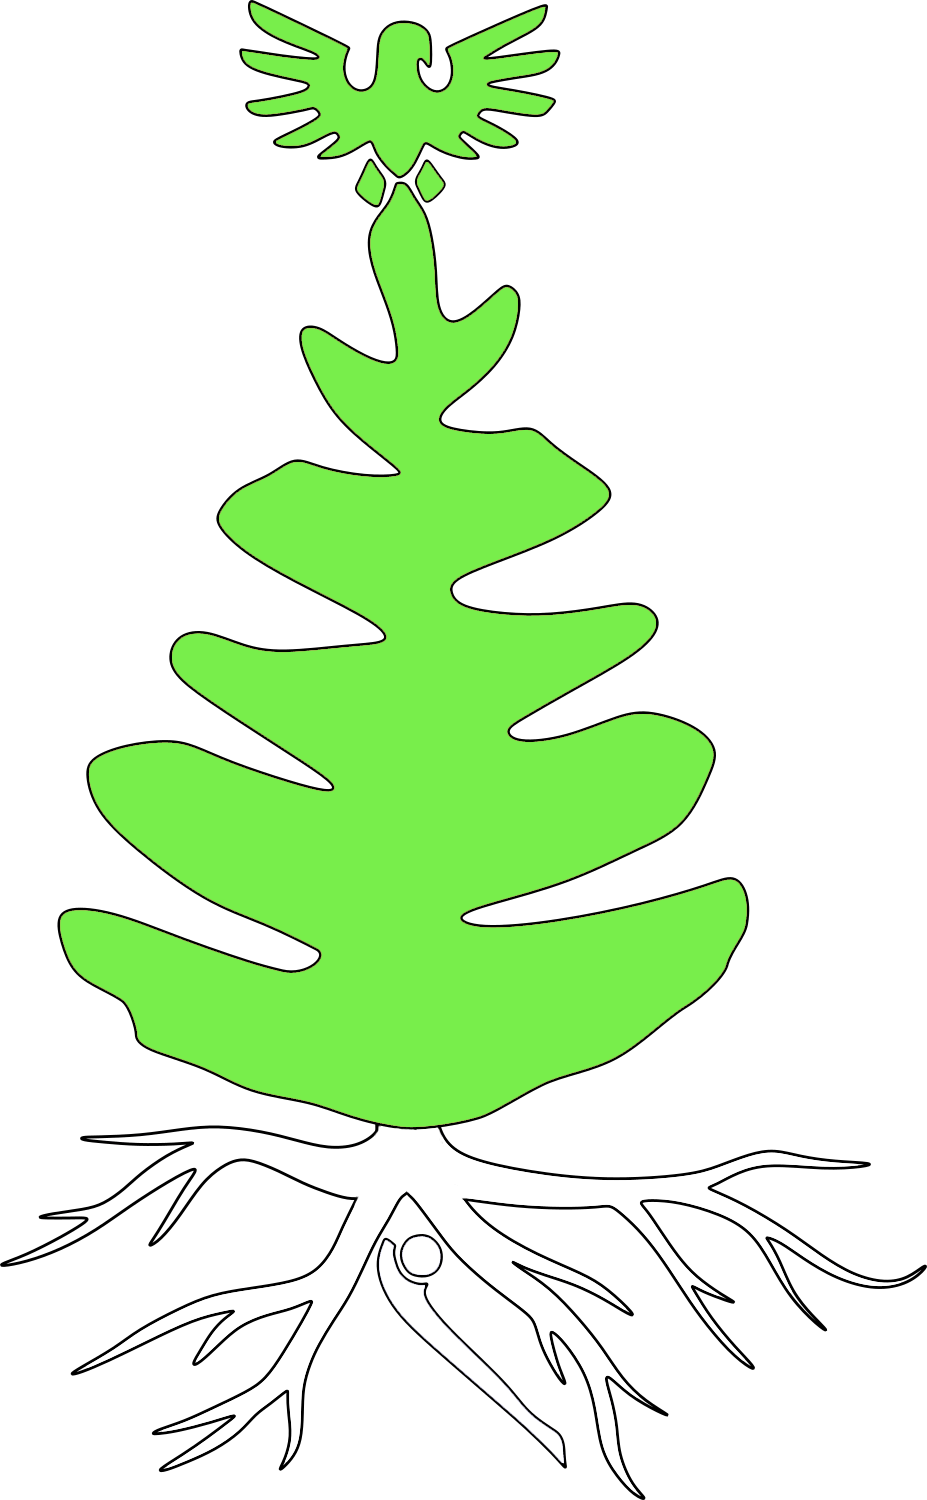 "green tree of peace"